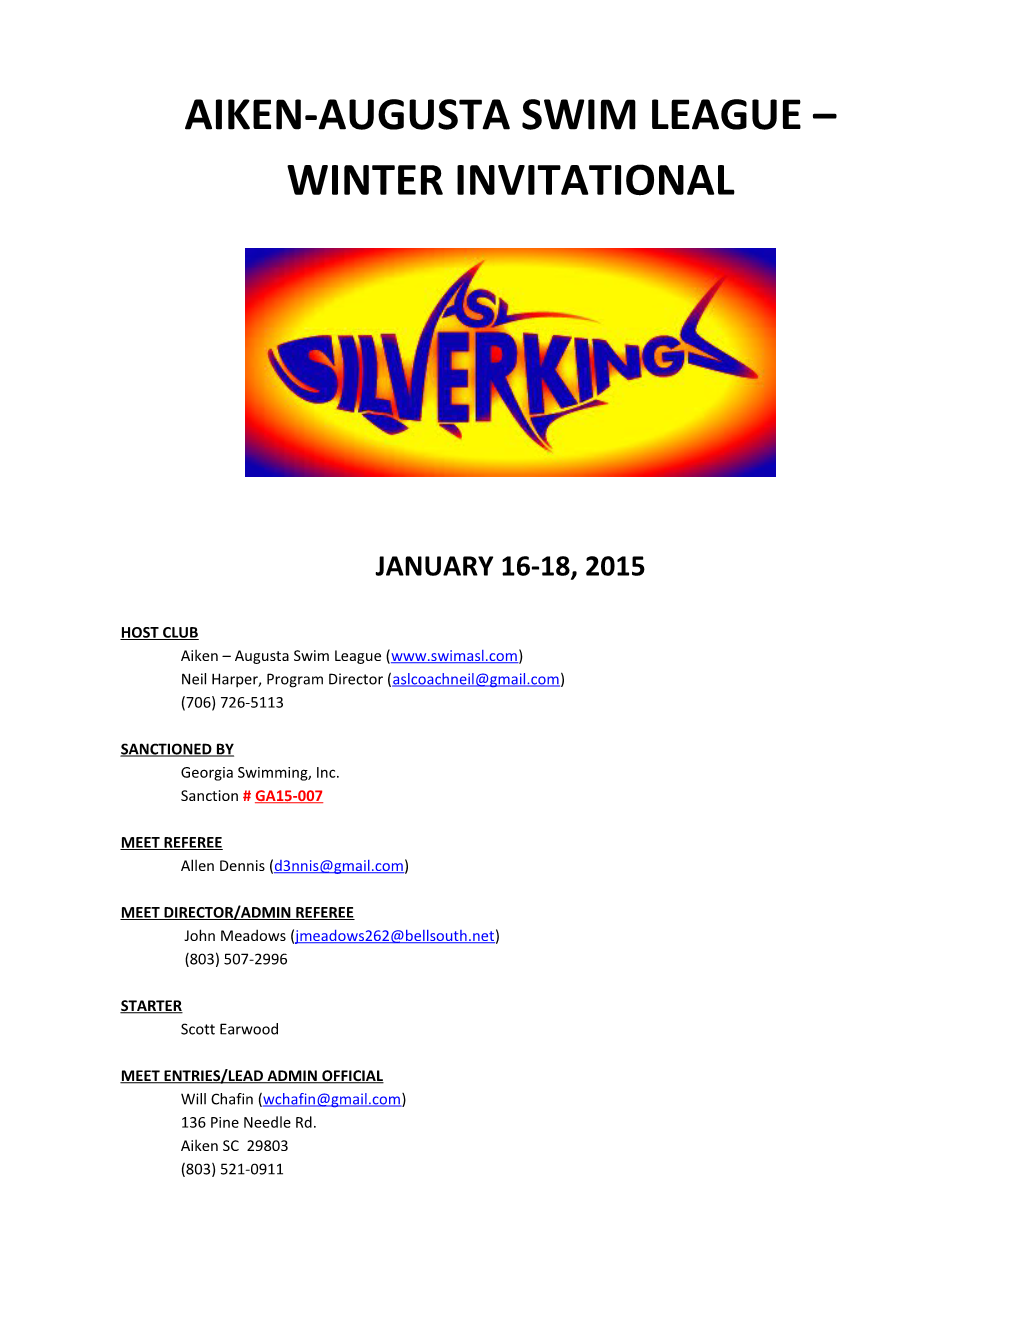 Aiken-Augusta Swim League Winter Invitational